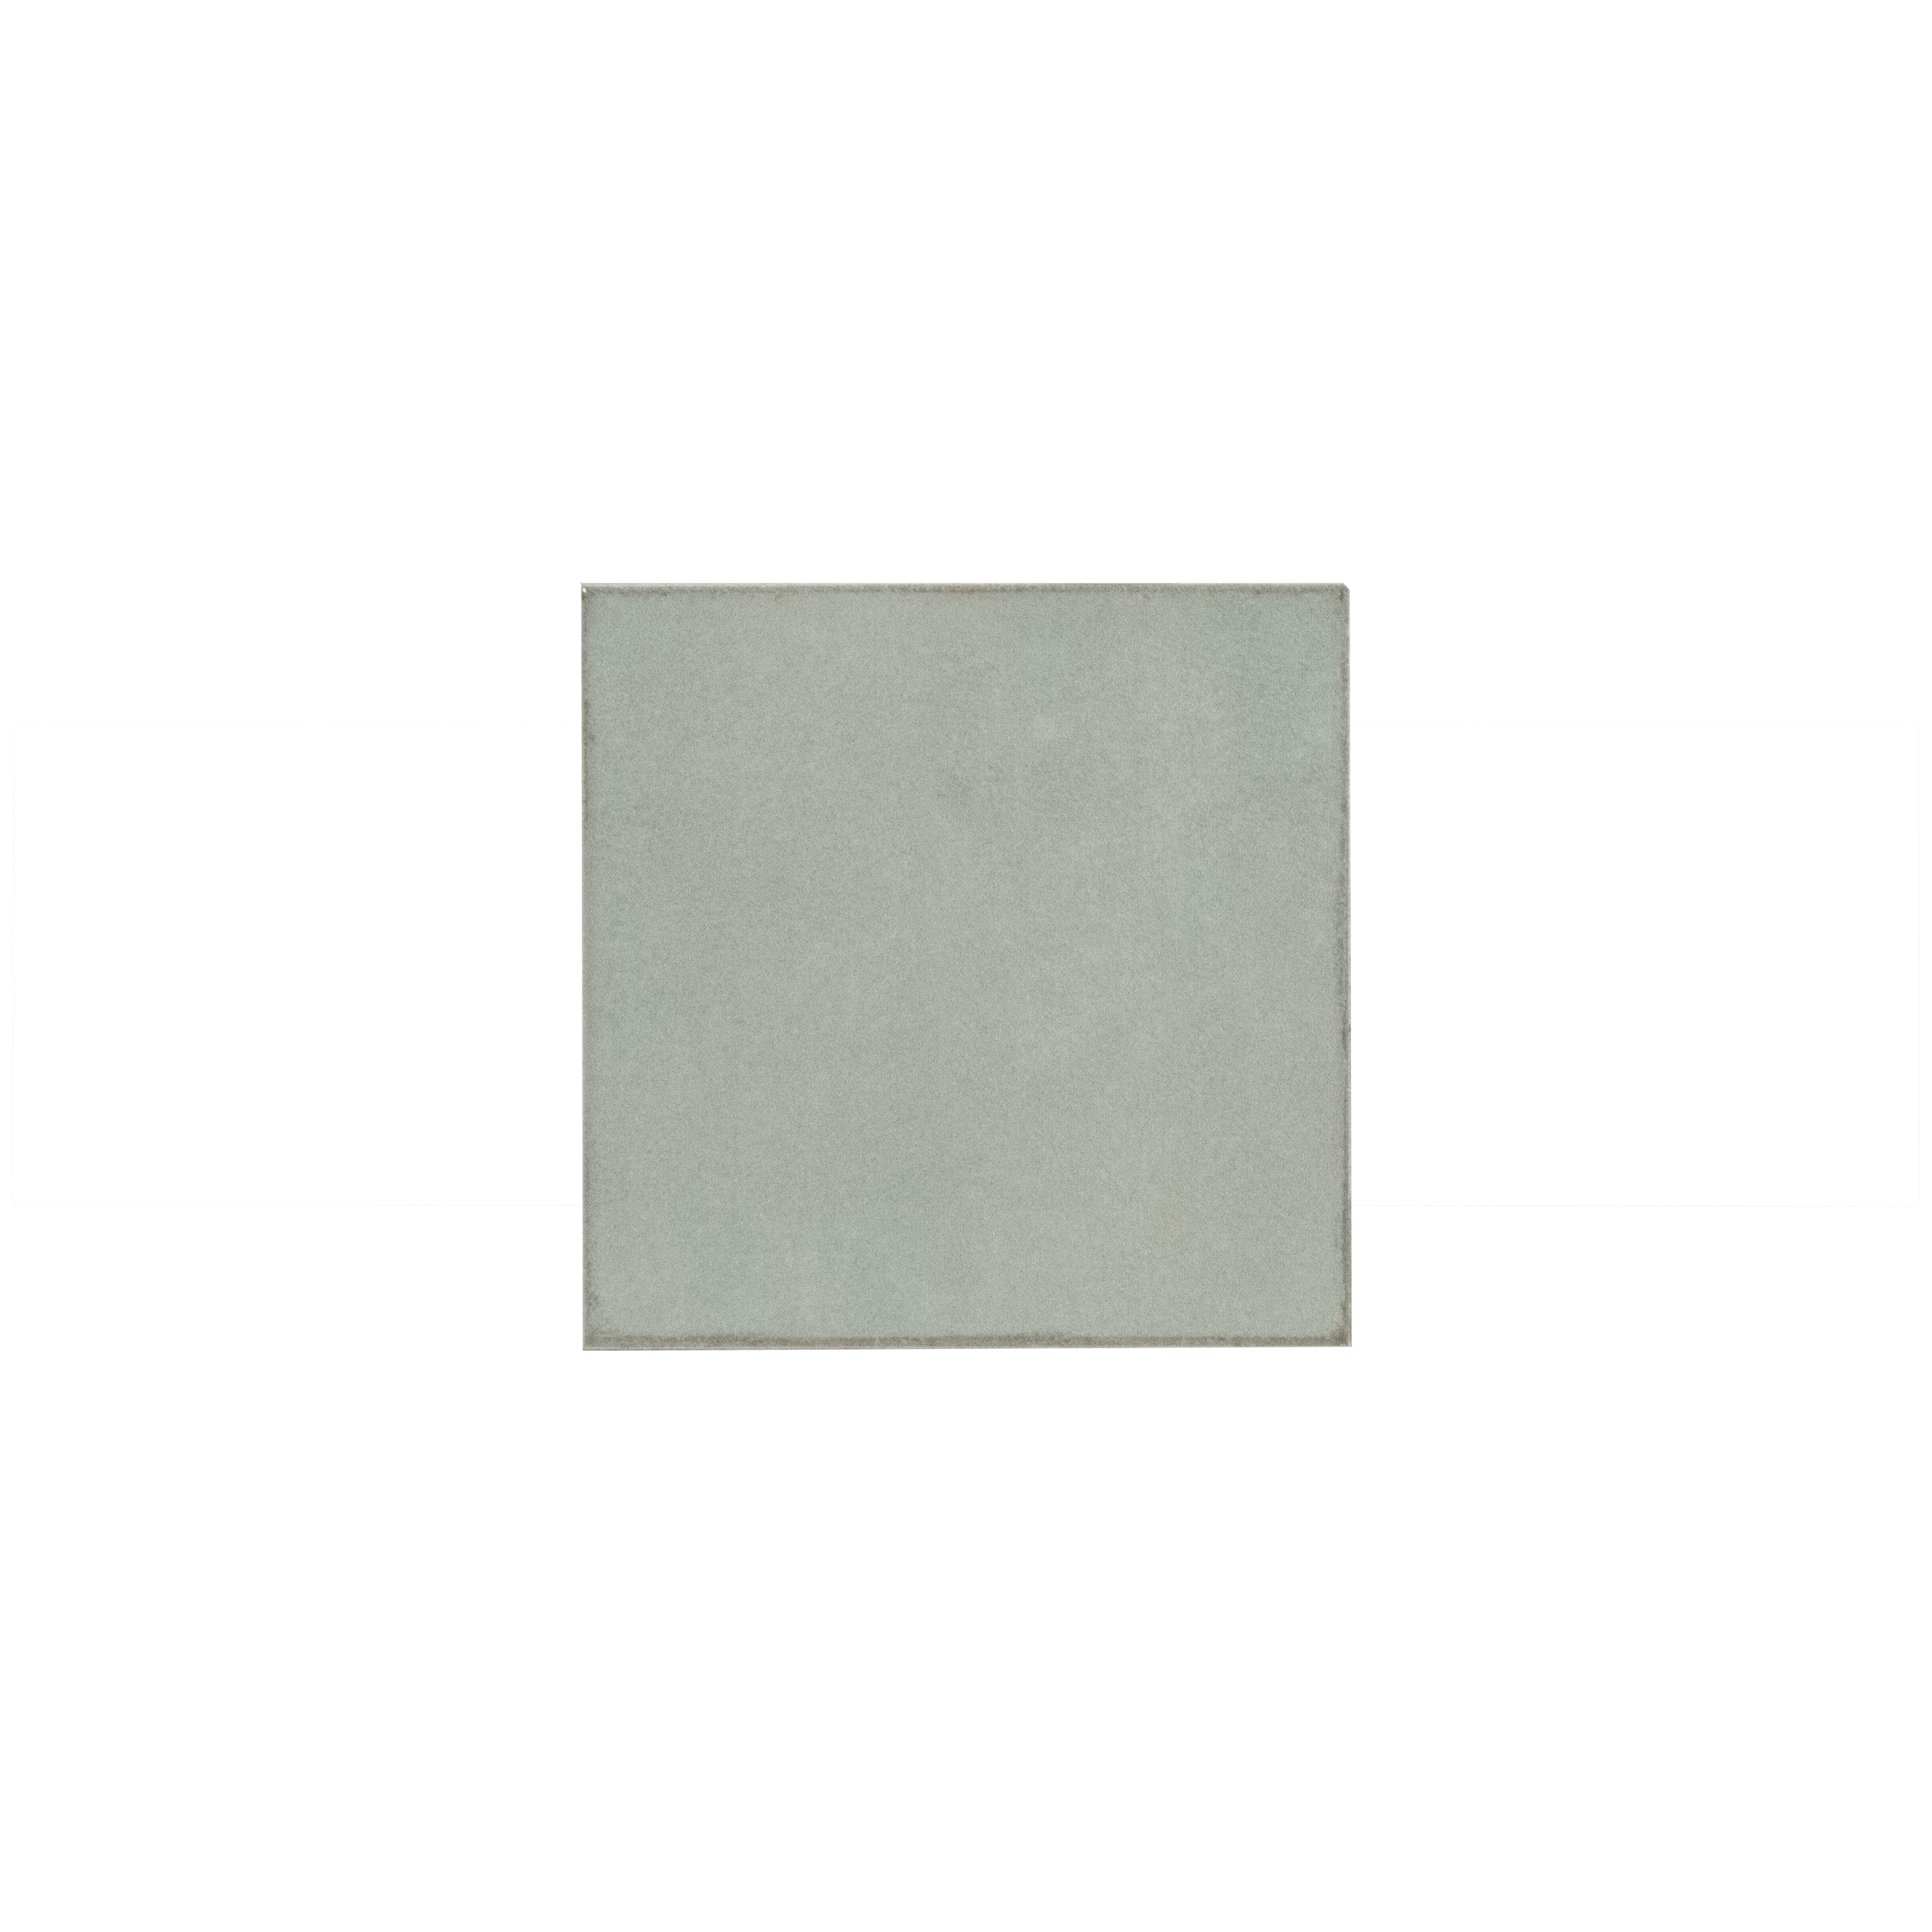 Renzo Jade 5X5 Glossy Ceramic Wall Tile -3